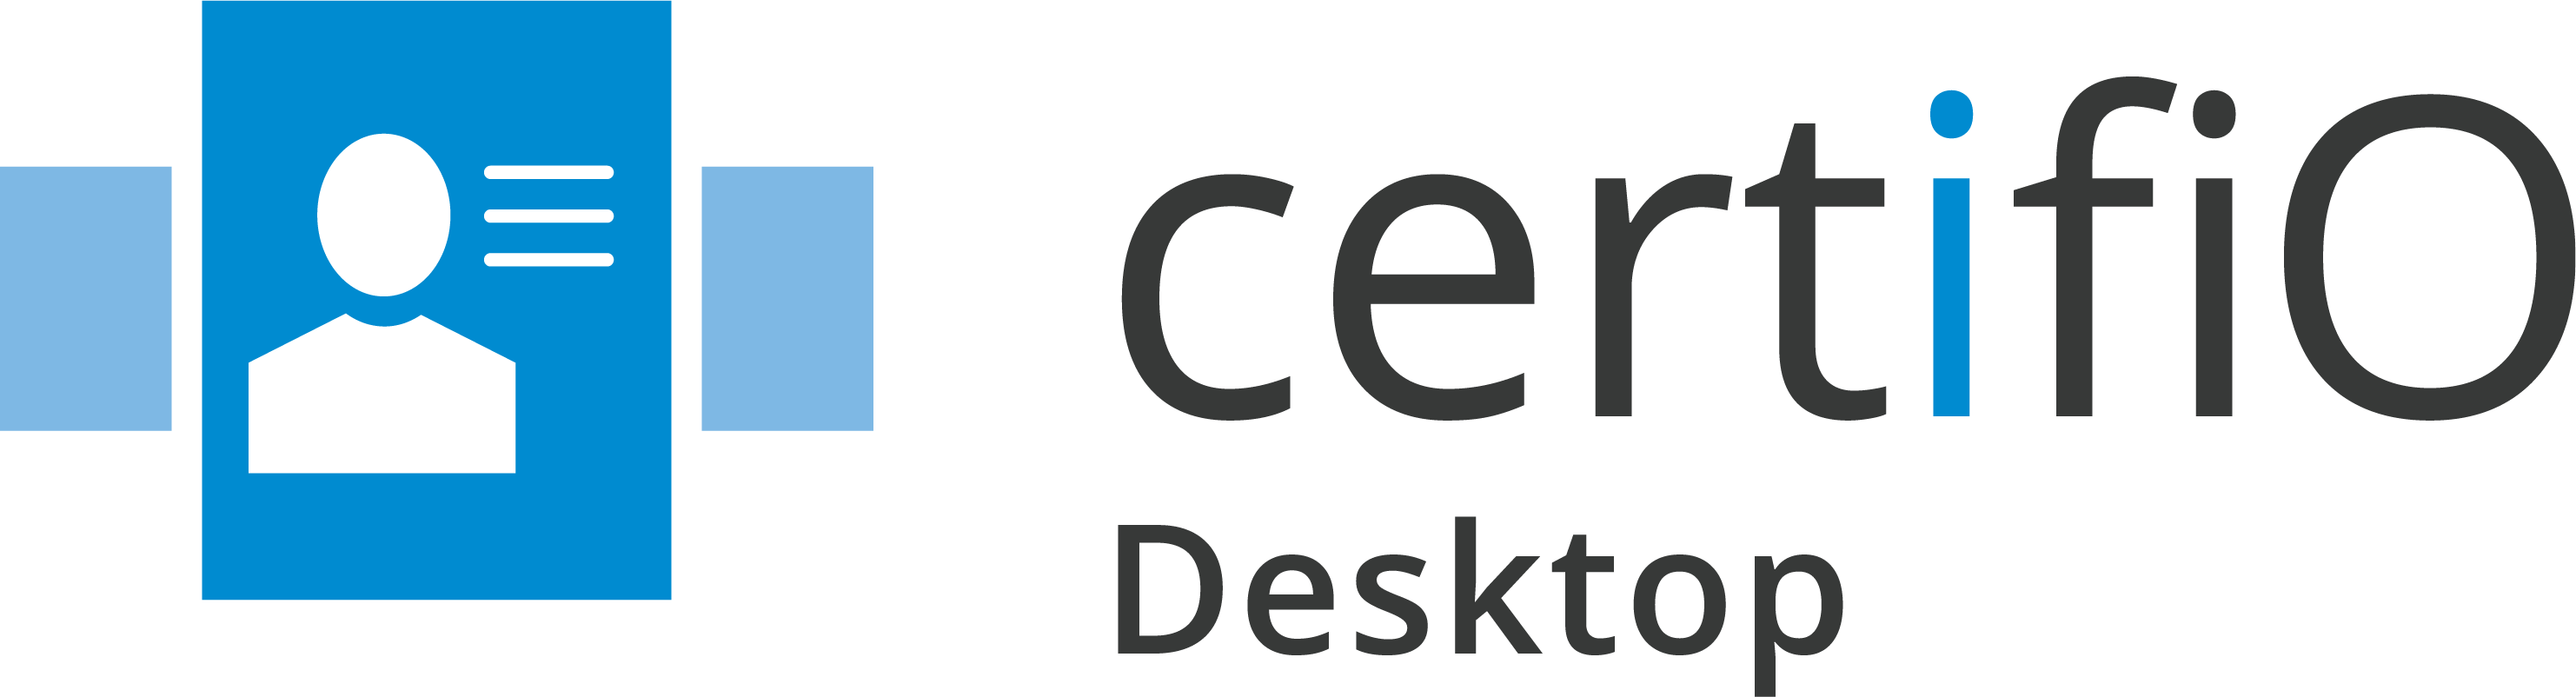 CertifiO_Desktop_colour_rgb